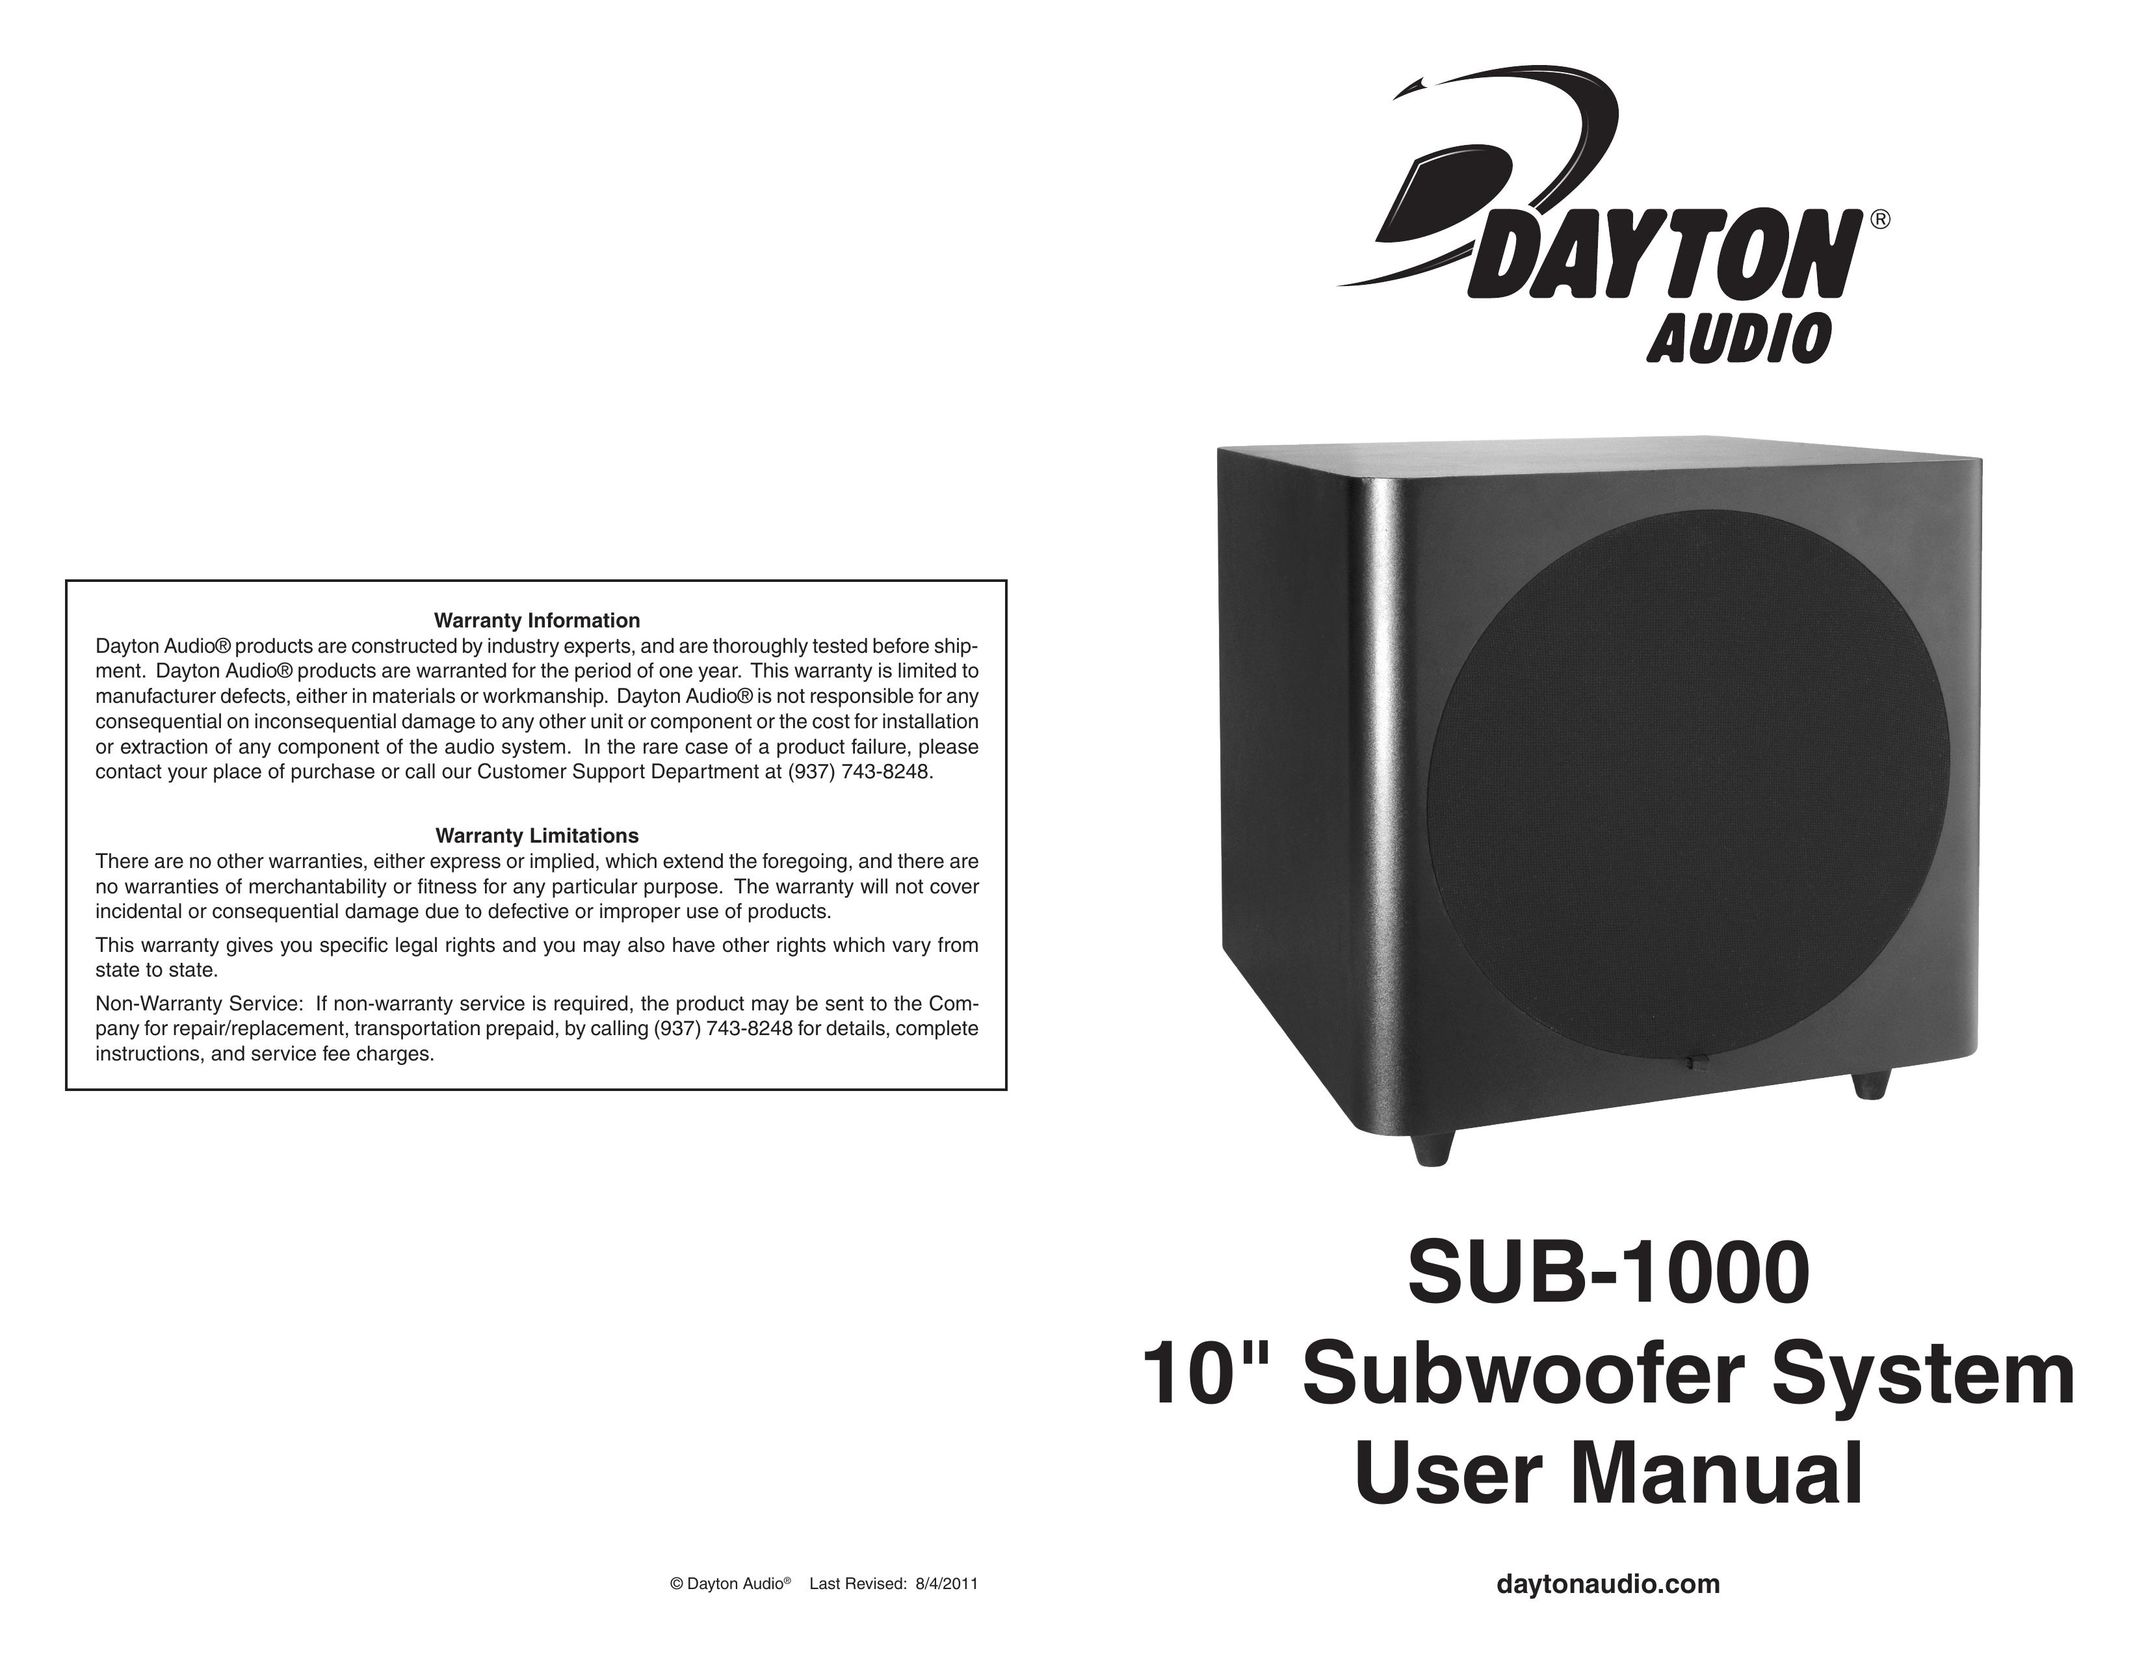 Dayton Audio sub-1000 Car Speaker User Manual